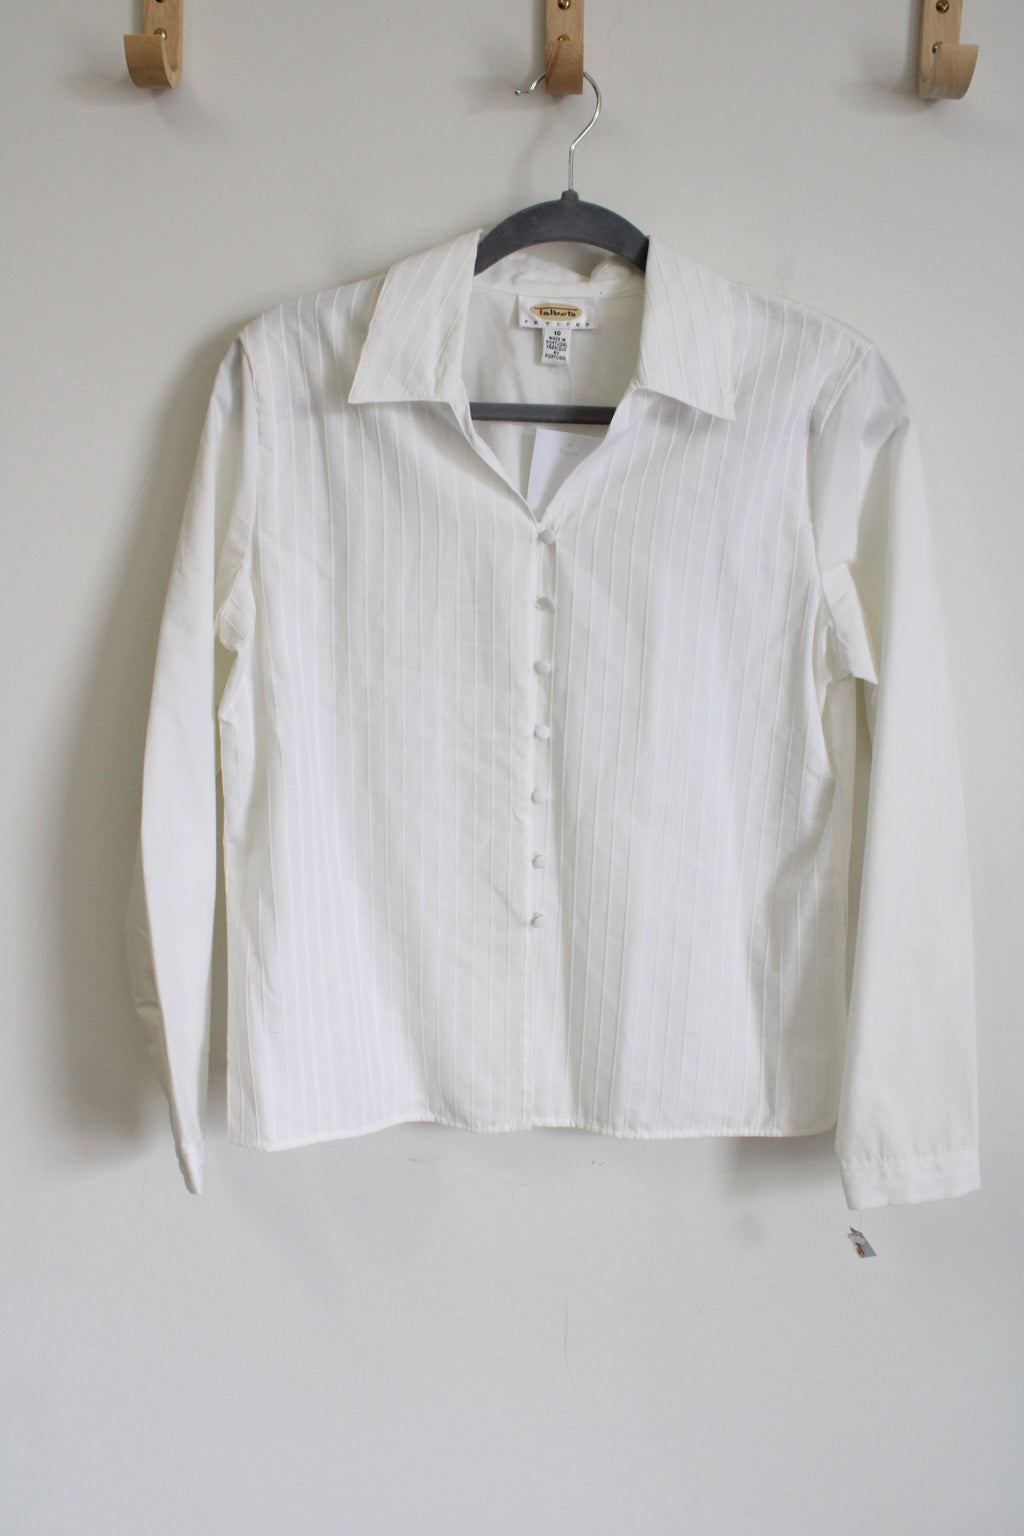 NEW Talbots White Button Down Shirt | 10 Petite